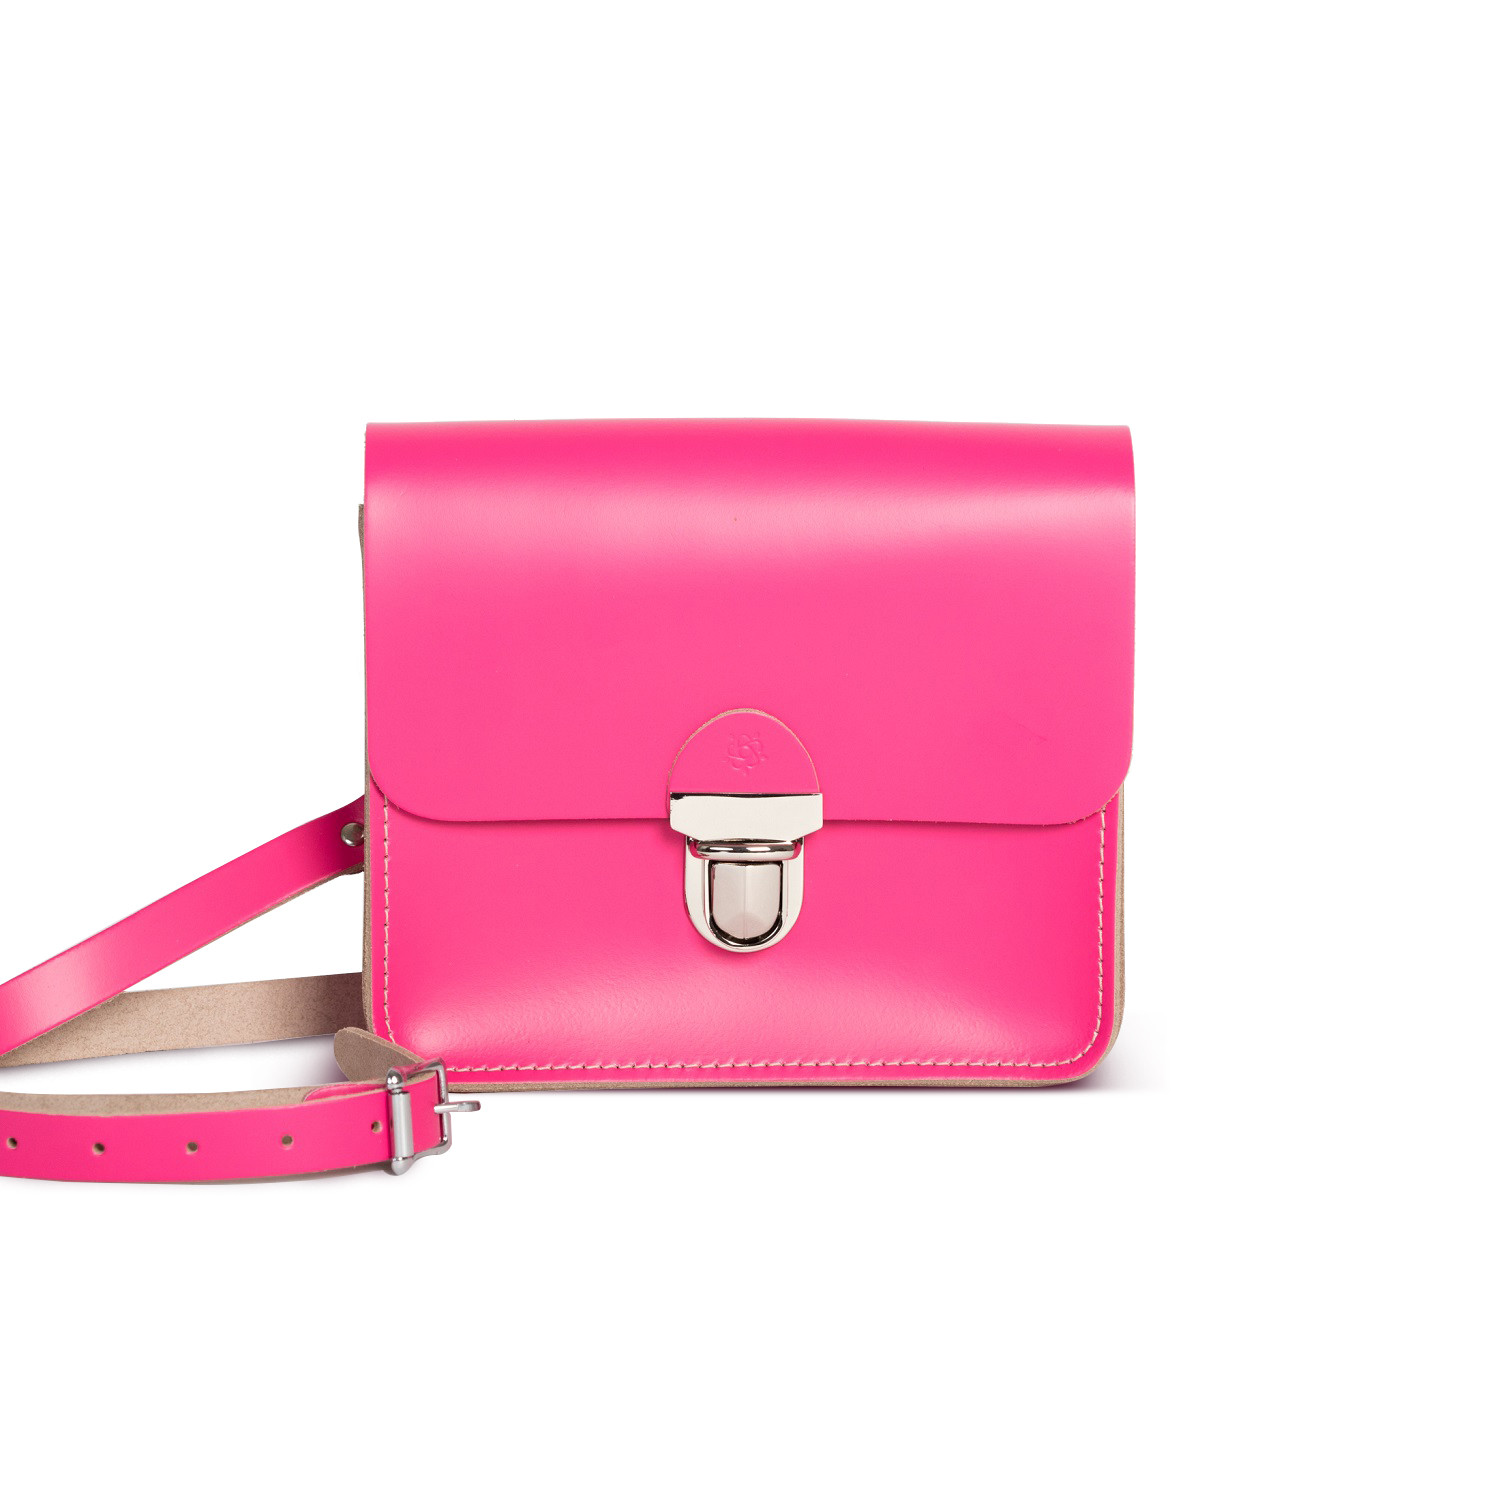 Sofia Premium Leather Crossbody Bag in Bright Pink 